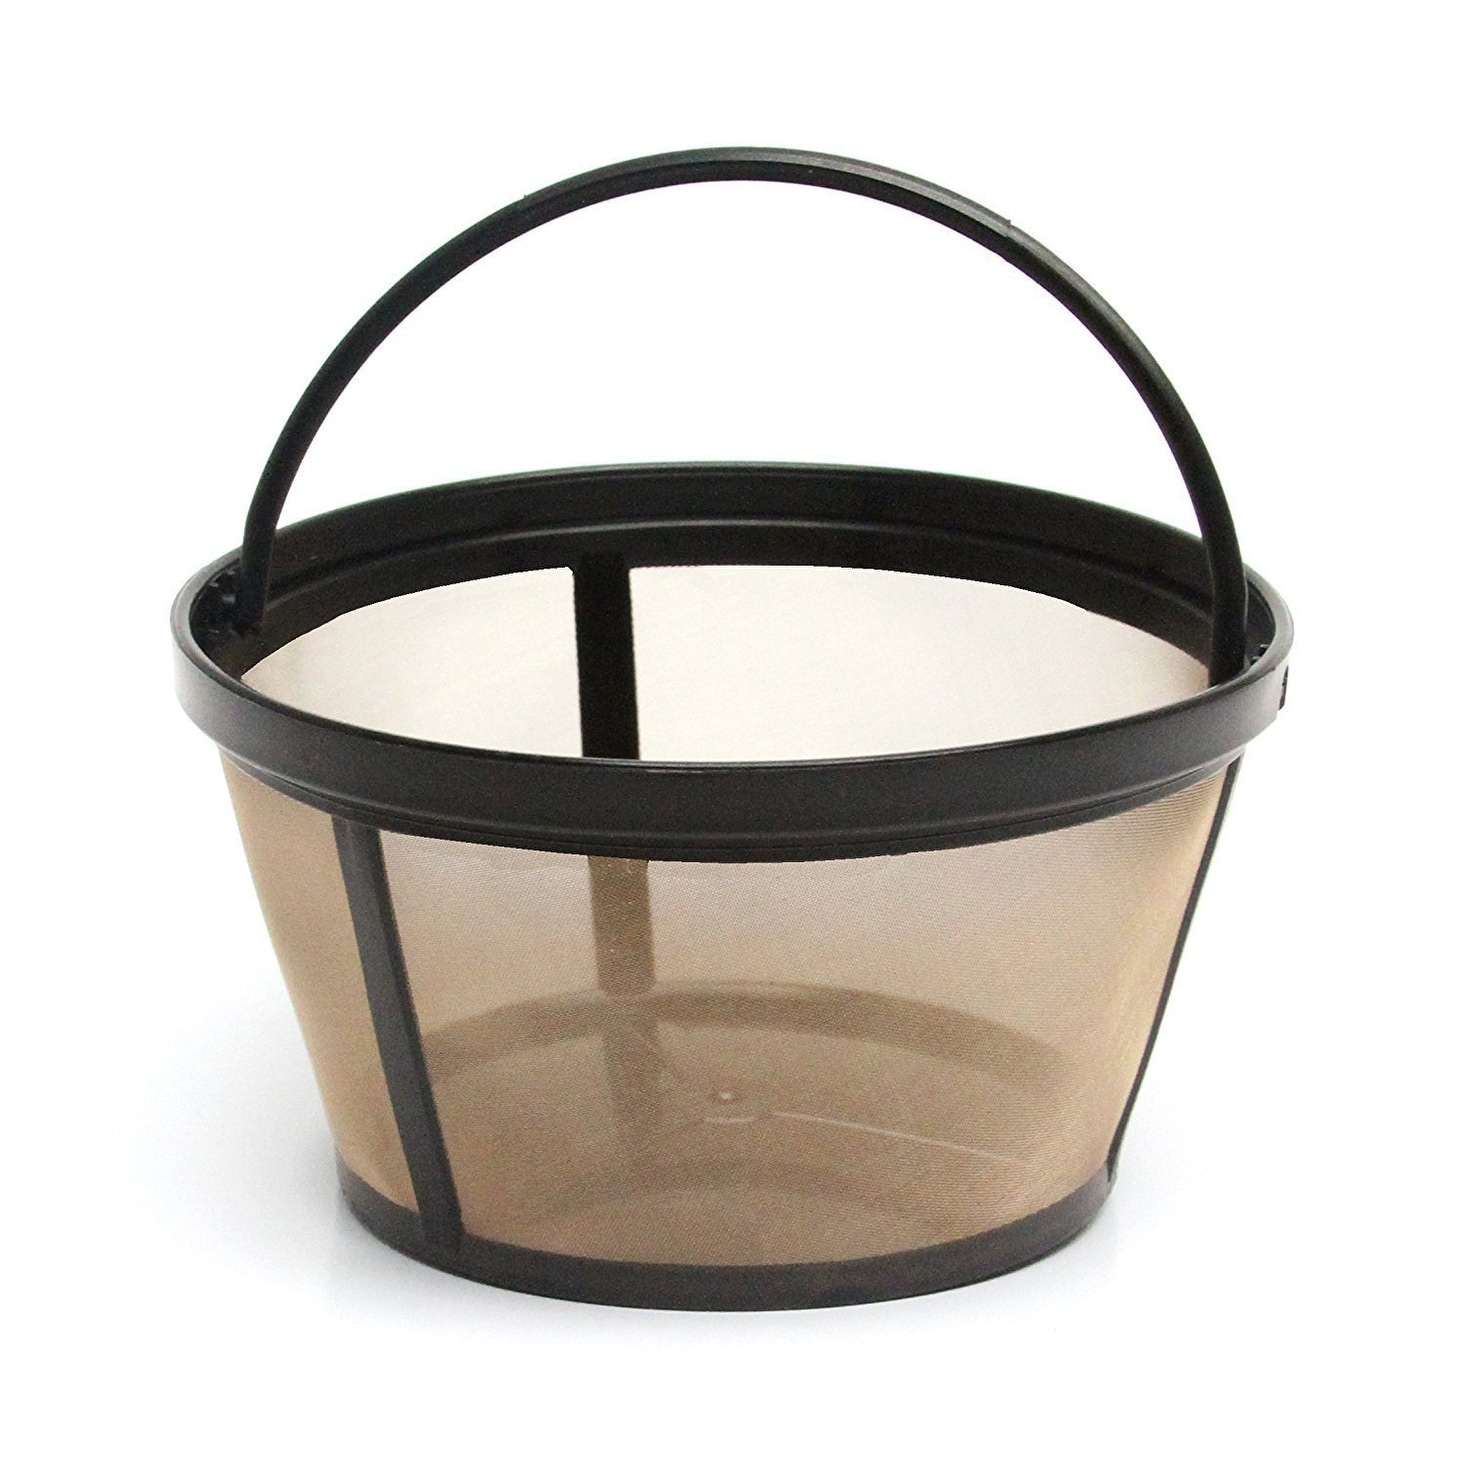 Premium Black & Decker Reusable Basket Filter Replacement